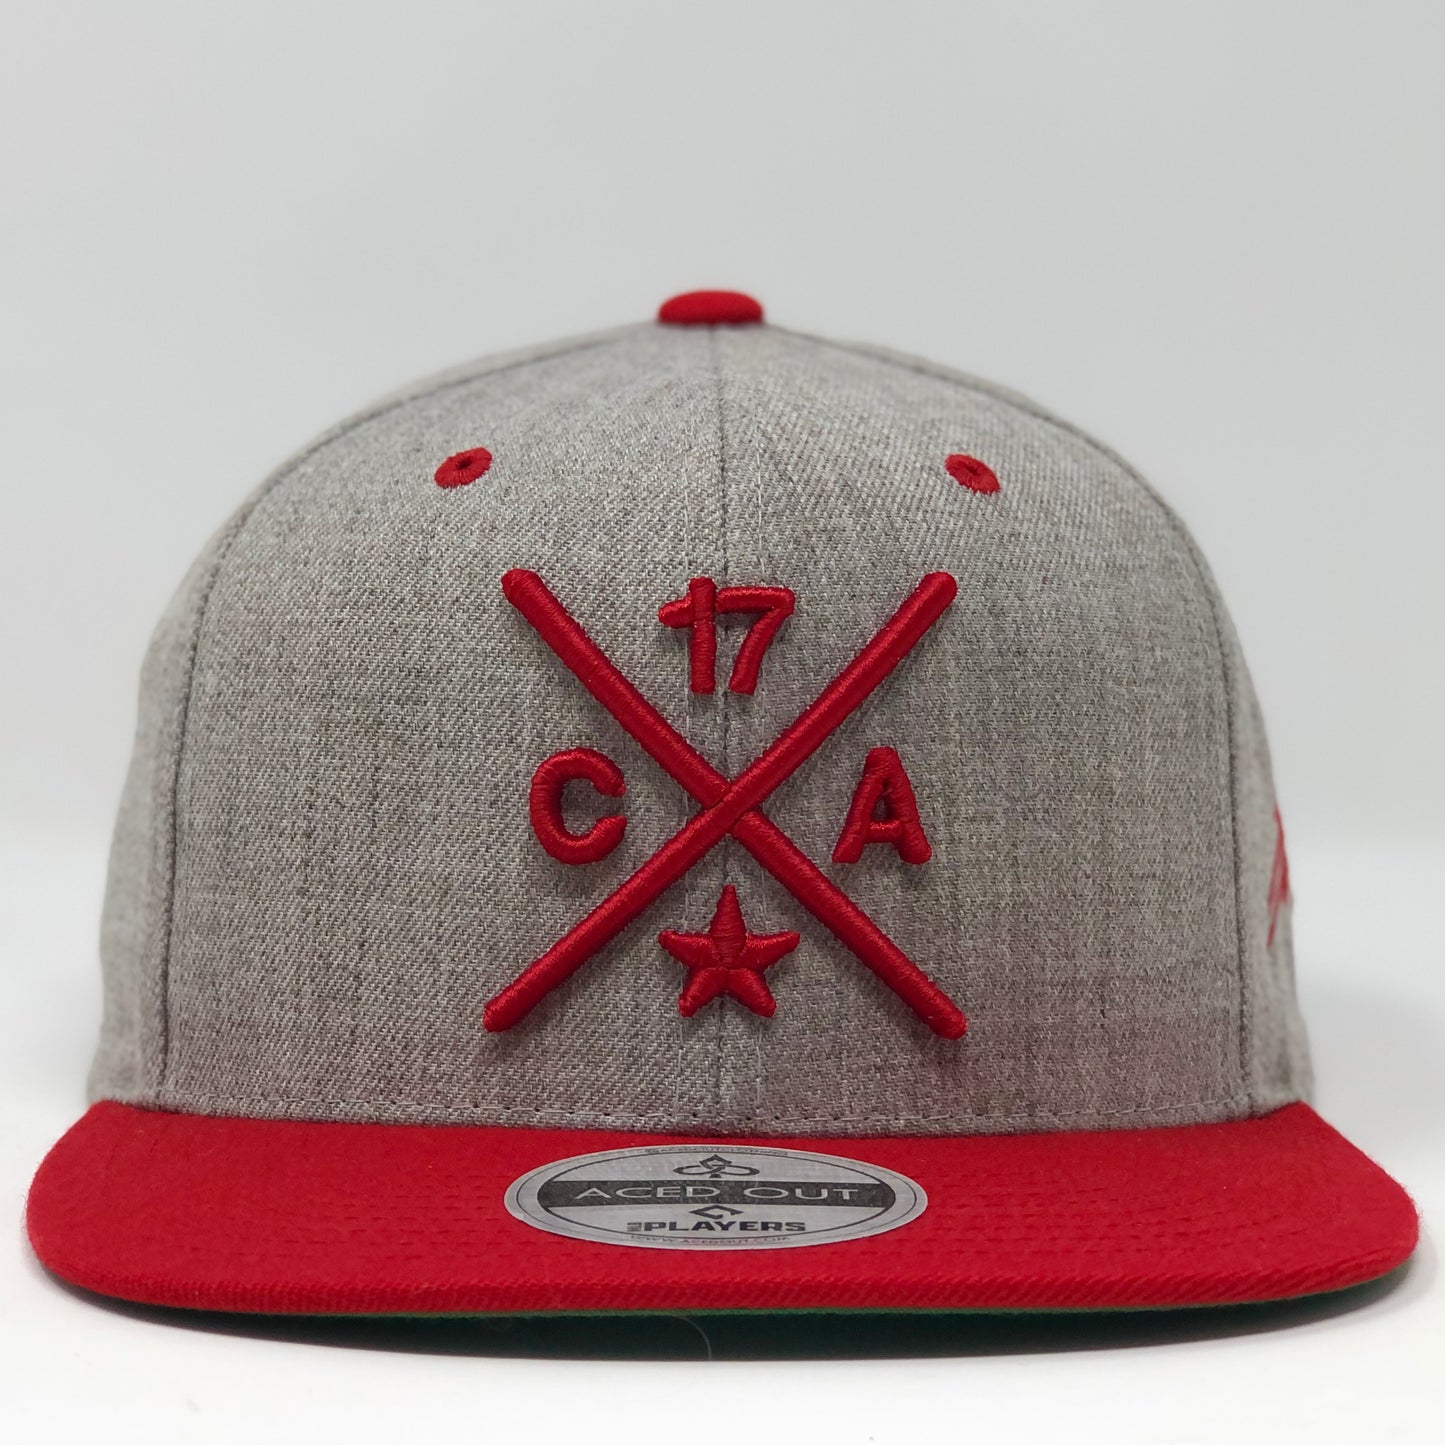 Shohei Ohtani Compass Hat - Grey/Red Snapback